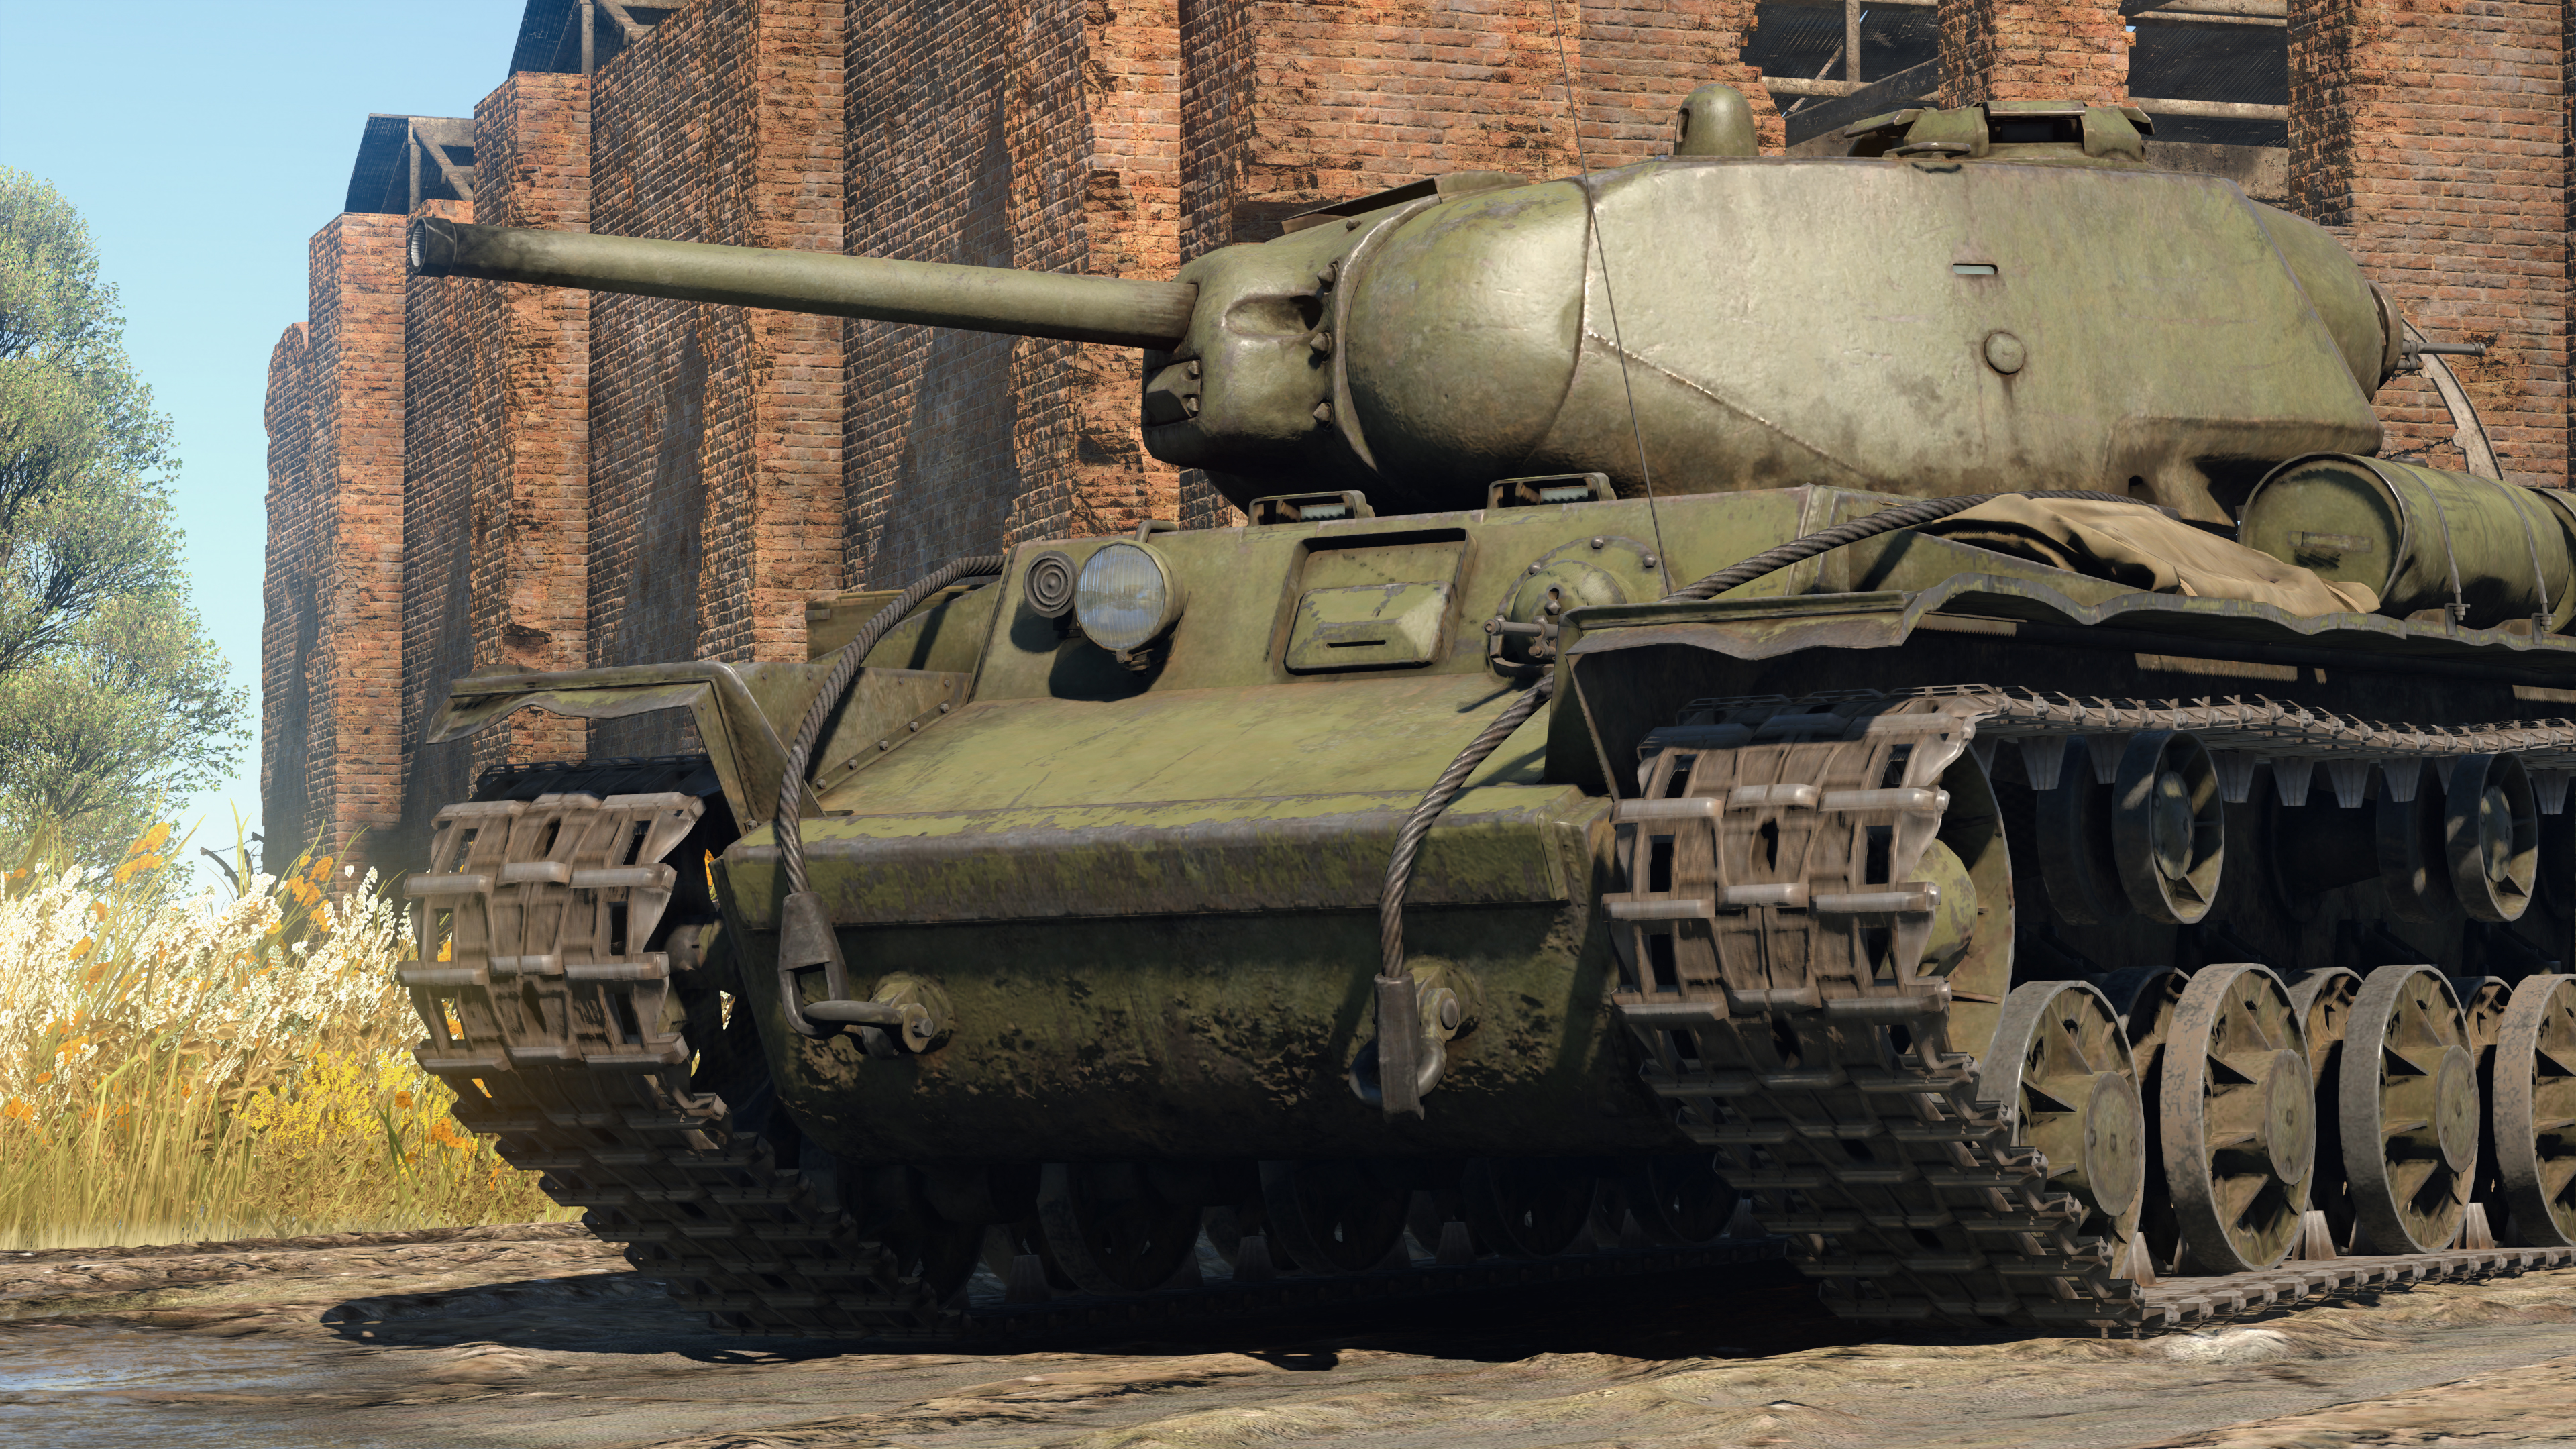 Кв 1 экран. Кв-85 танк вар Тандер. Тяжелый танк кв-1с. Танк кв-1.